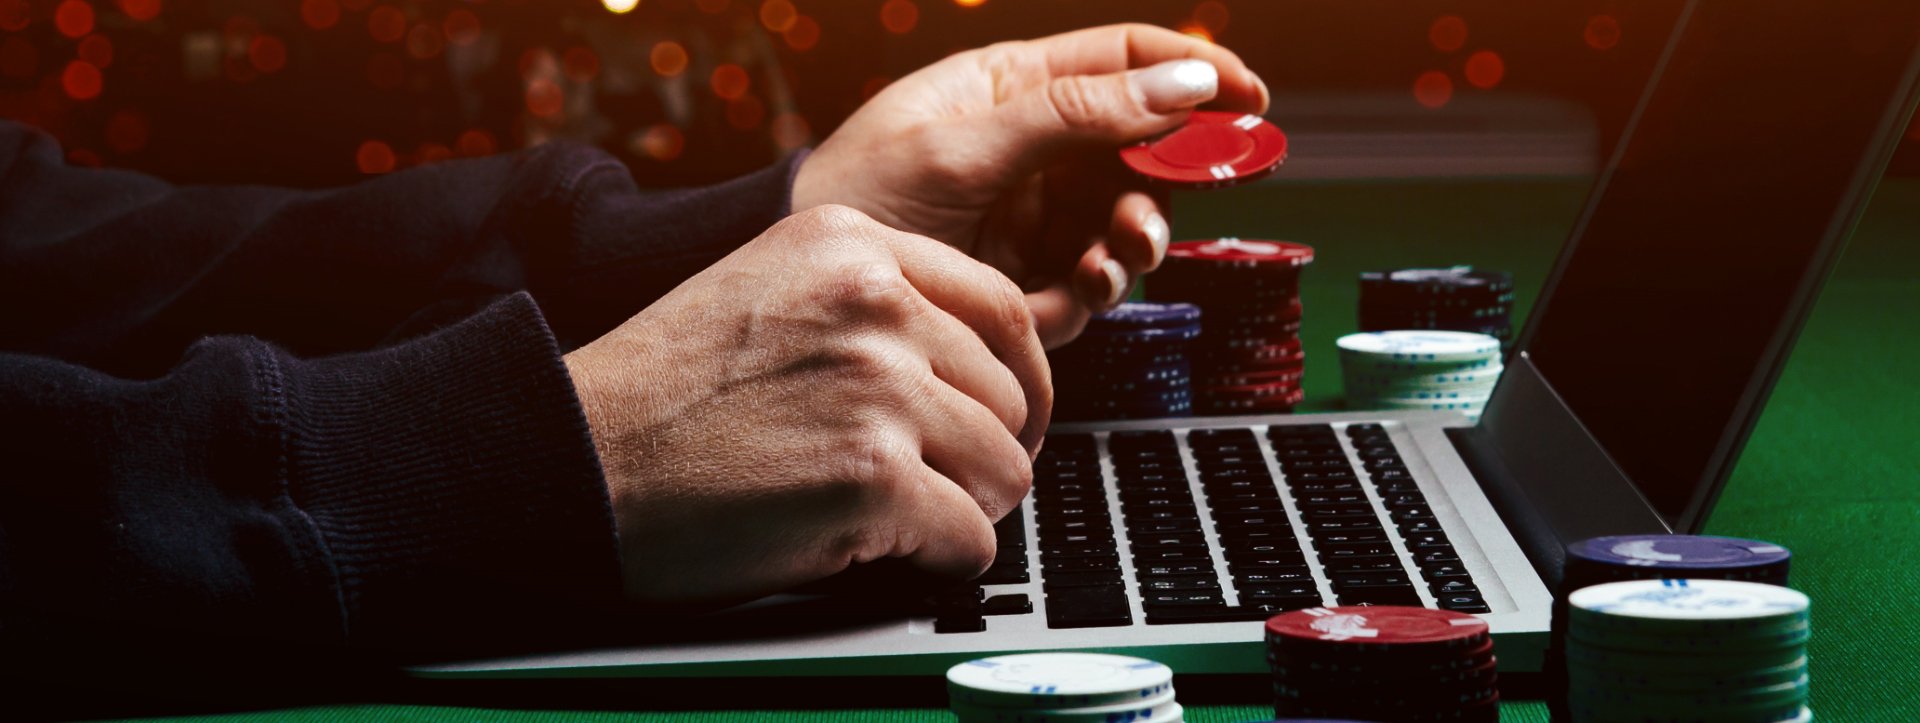 Skrill online gambling for business, man hands holding poker chips on a Mac book